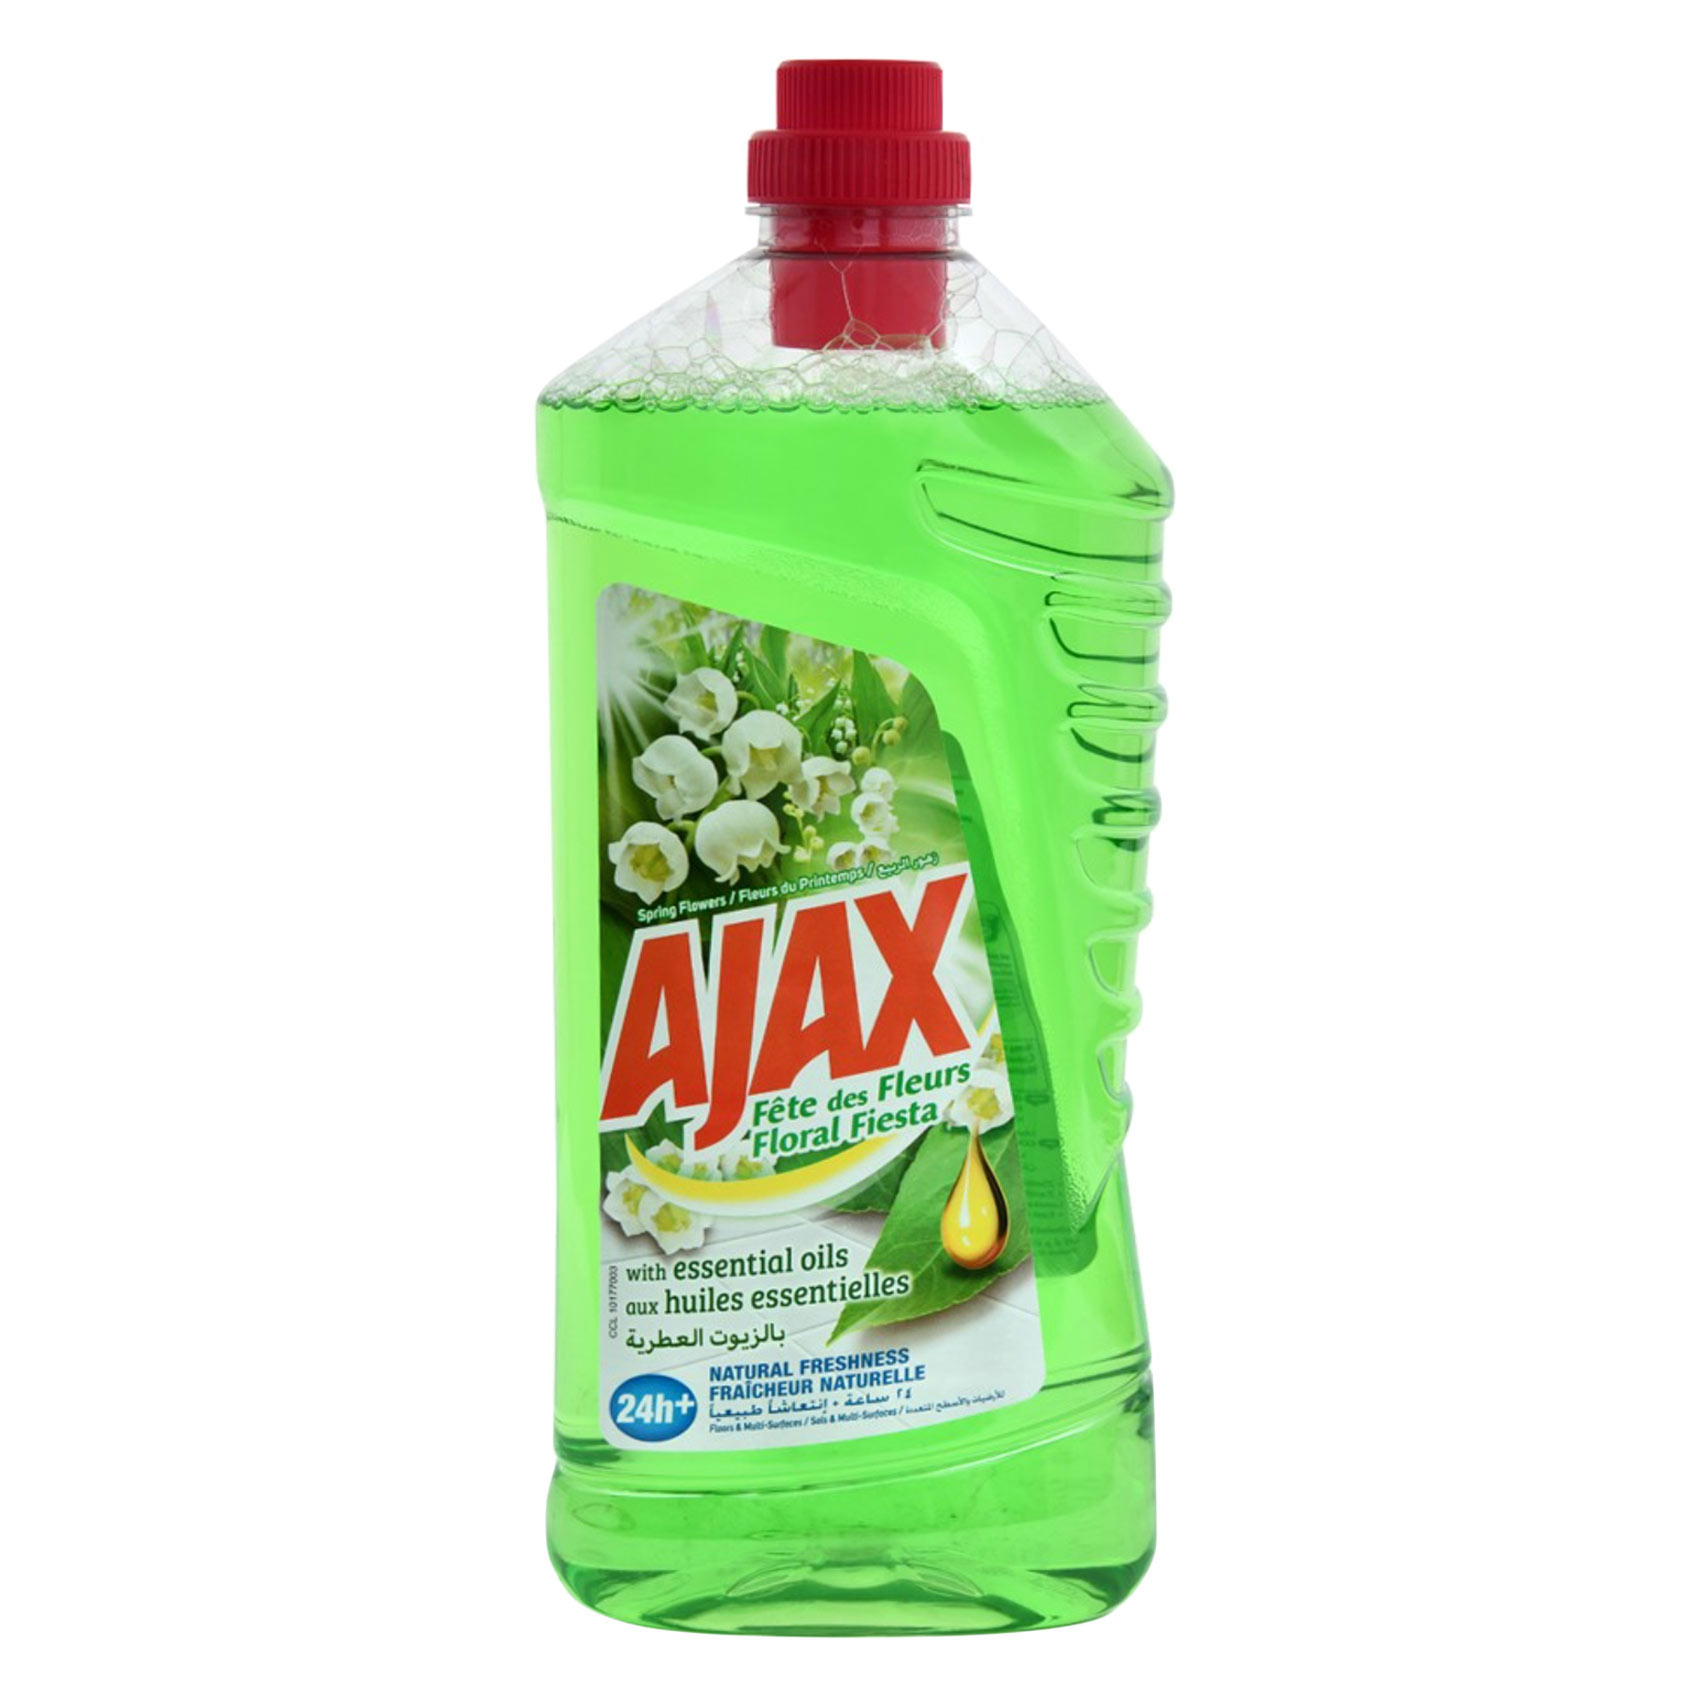 Ajax Fete Des Fleurs Spring Detergent 1.25L 20Percent  Off